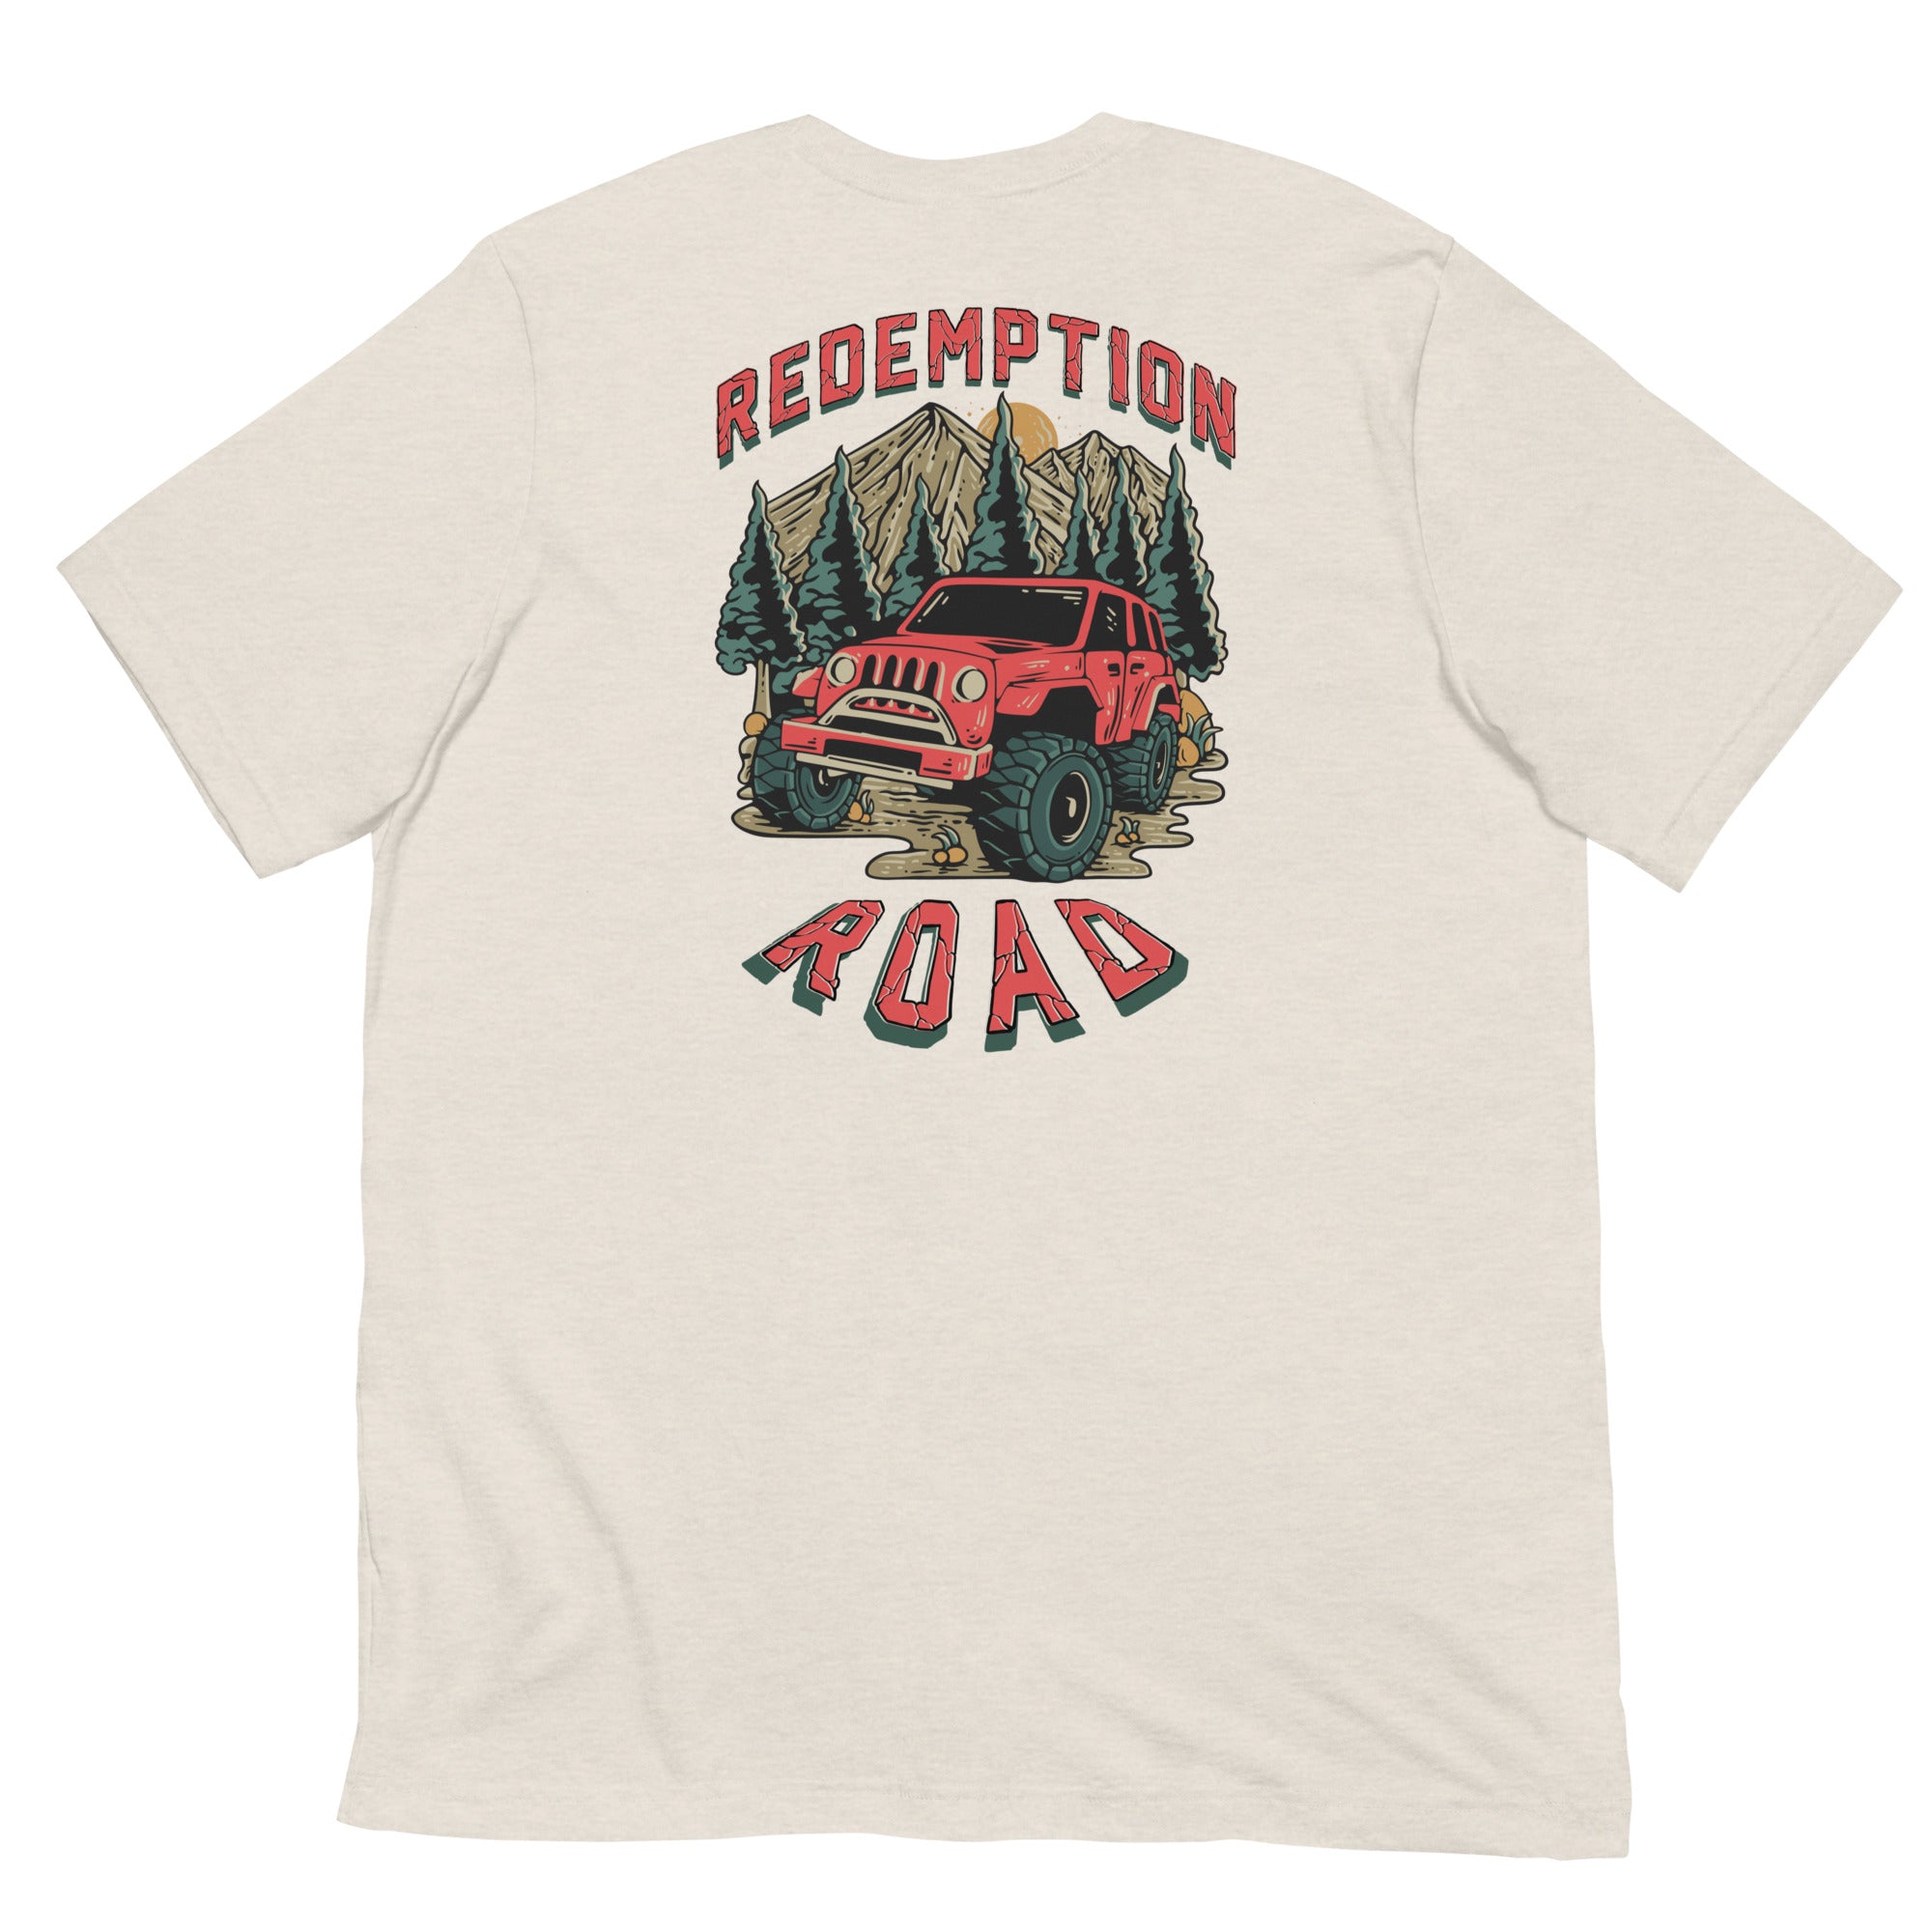 Redemption Road Short Sleeve - 2